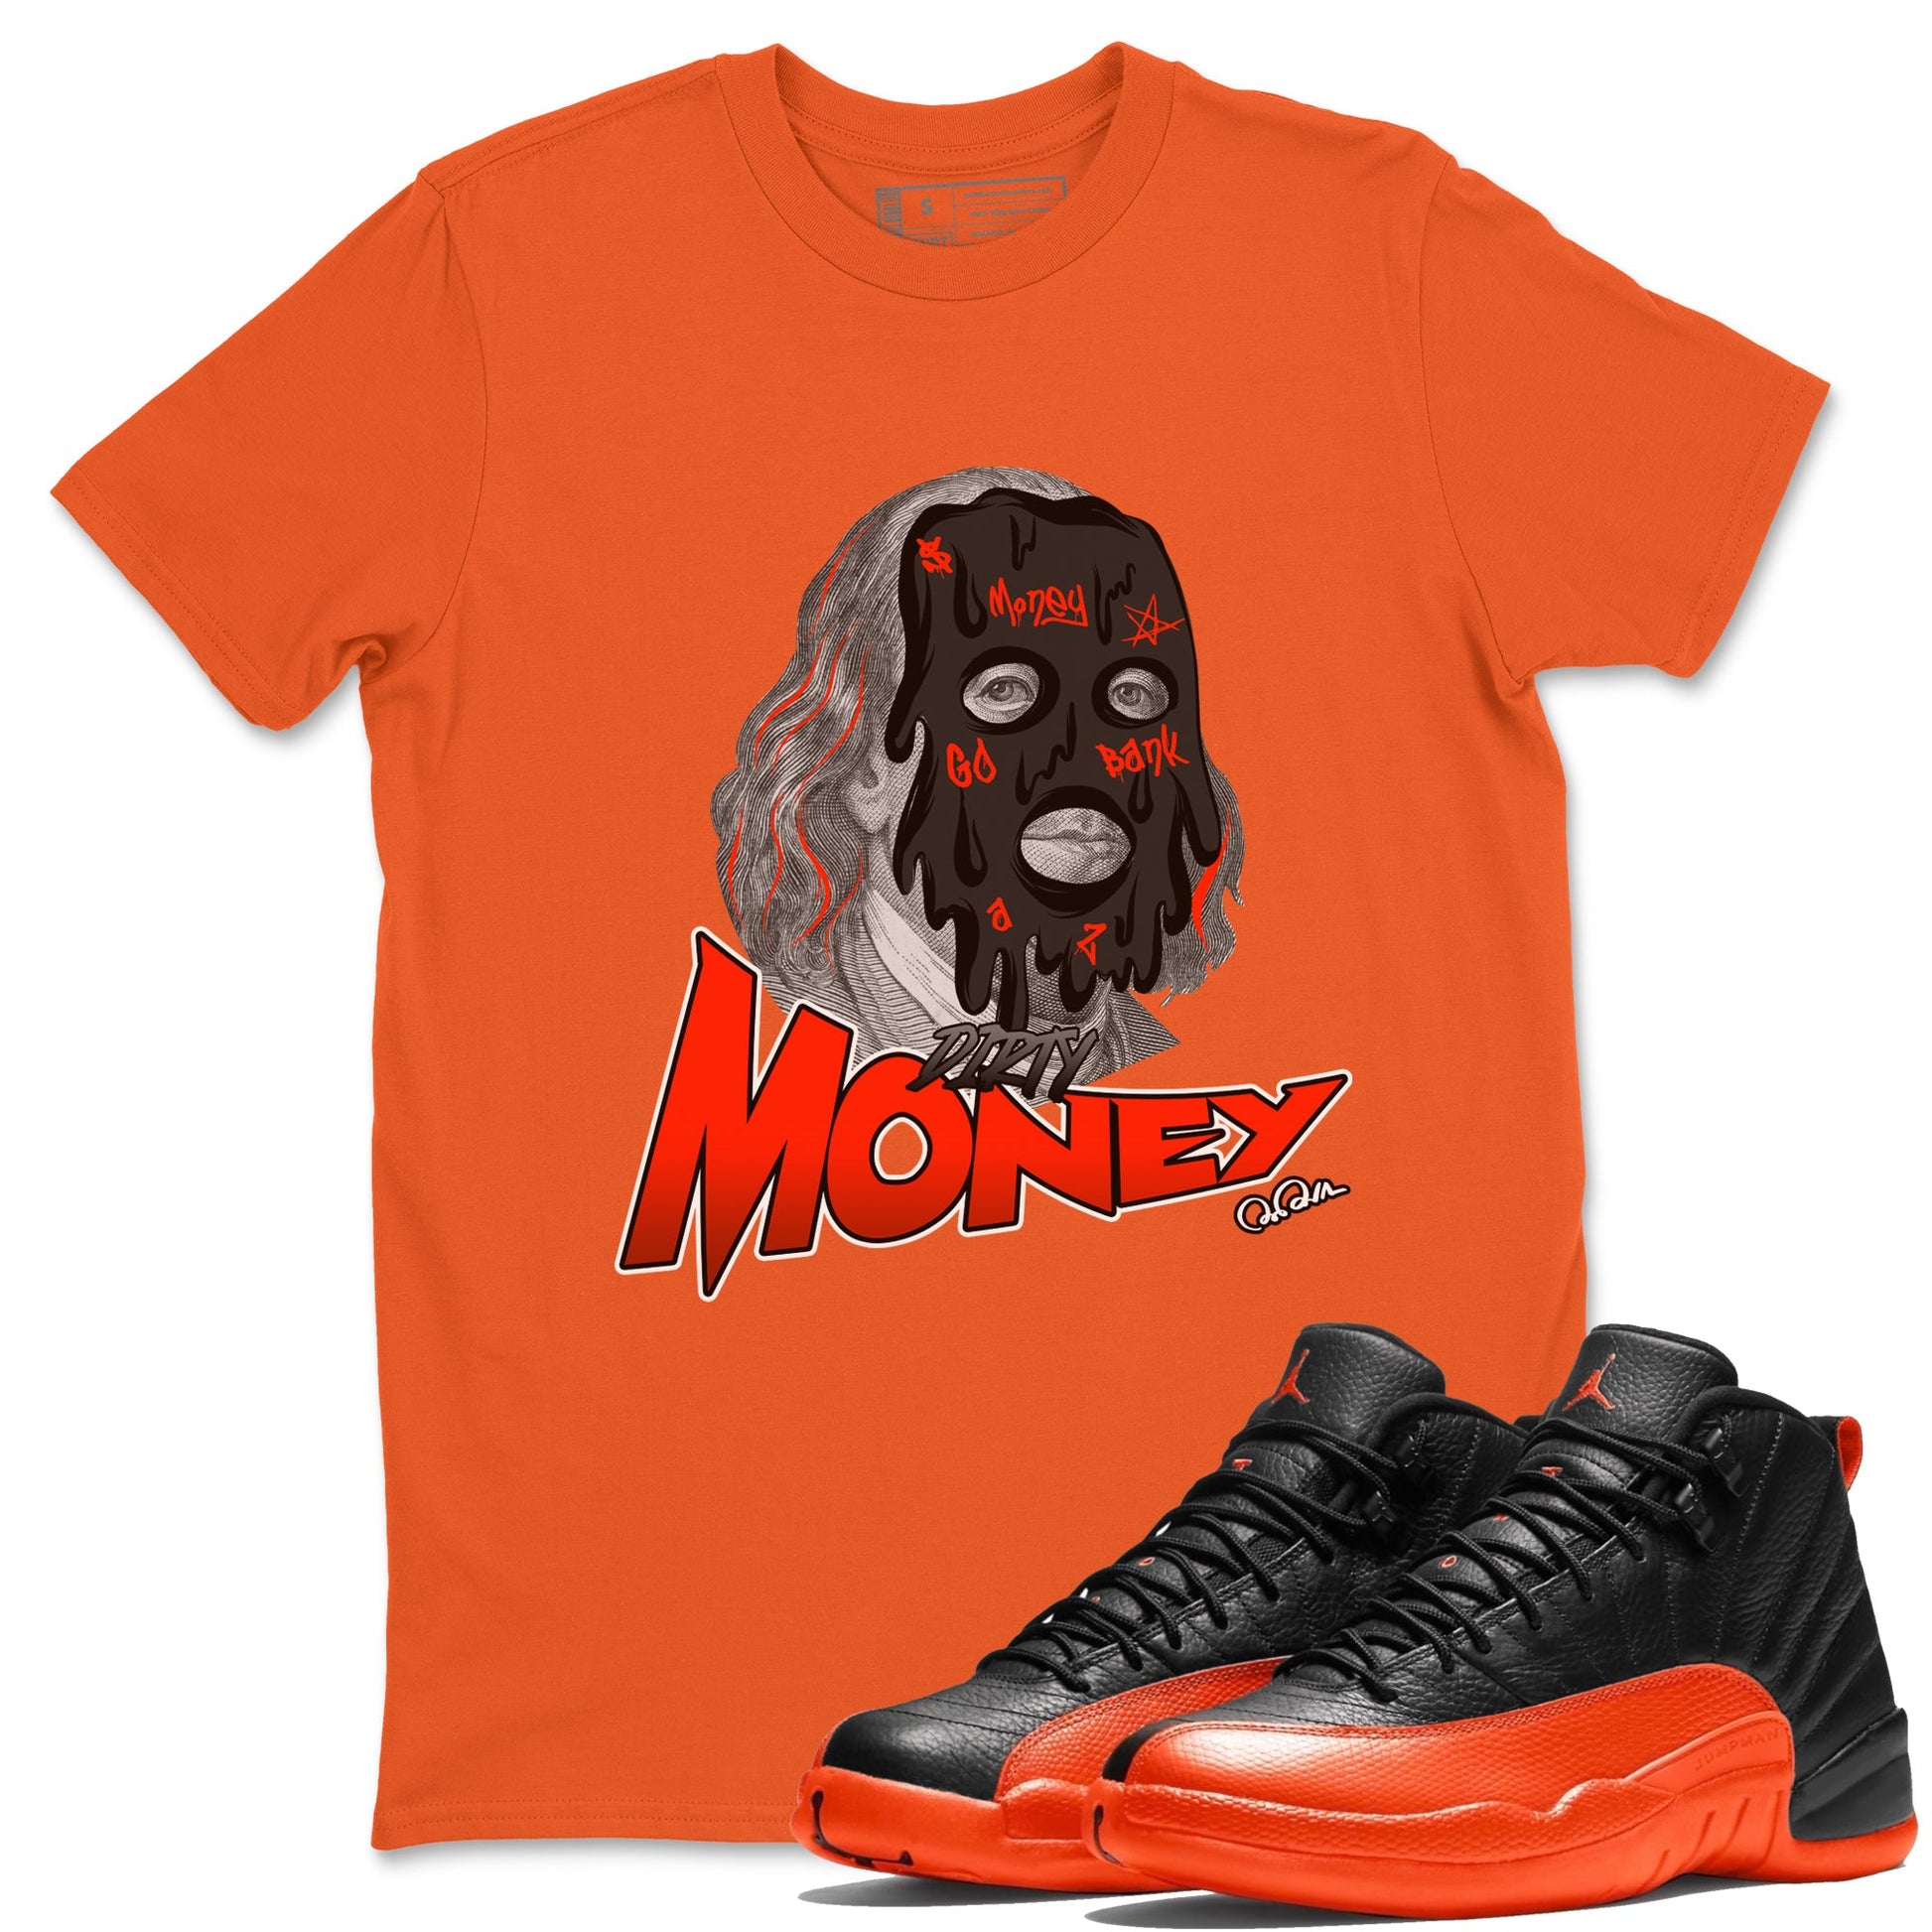 Air Jordan 12 Brilliant Orange Sneaker Match Tees Dirty Money Sneaker Tees AJ12 Brilliant Orange Sneaker Release Tees Unisex Shirts Orange 1